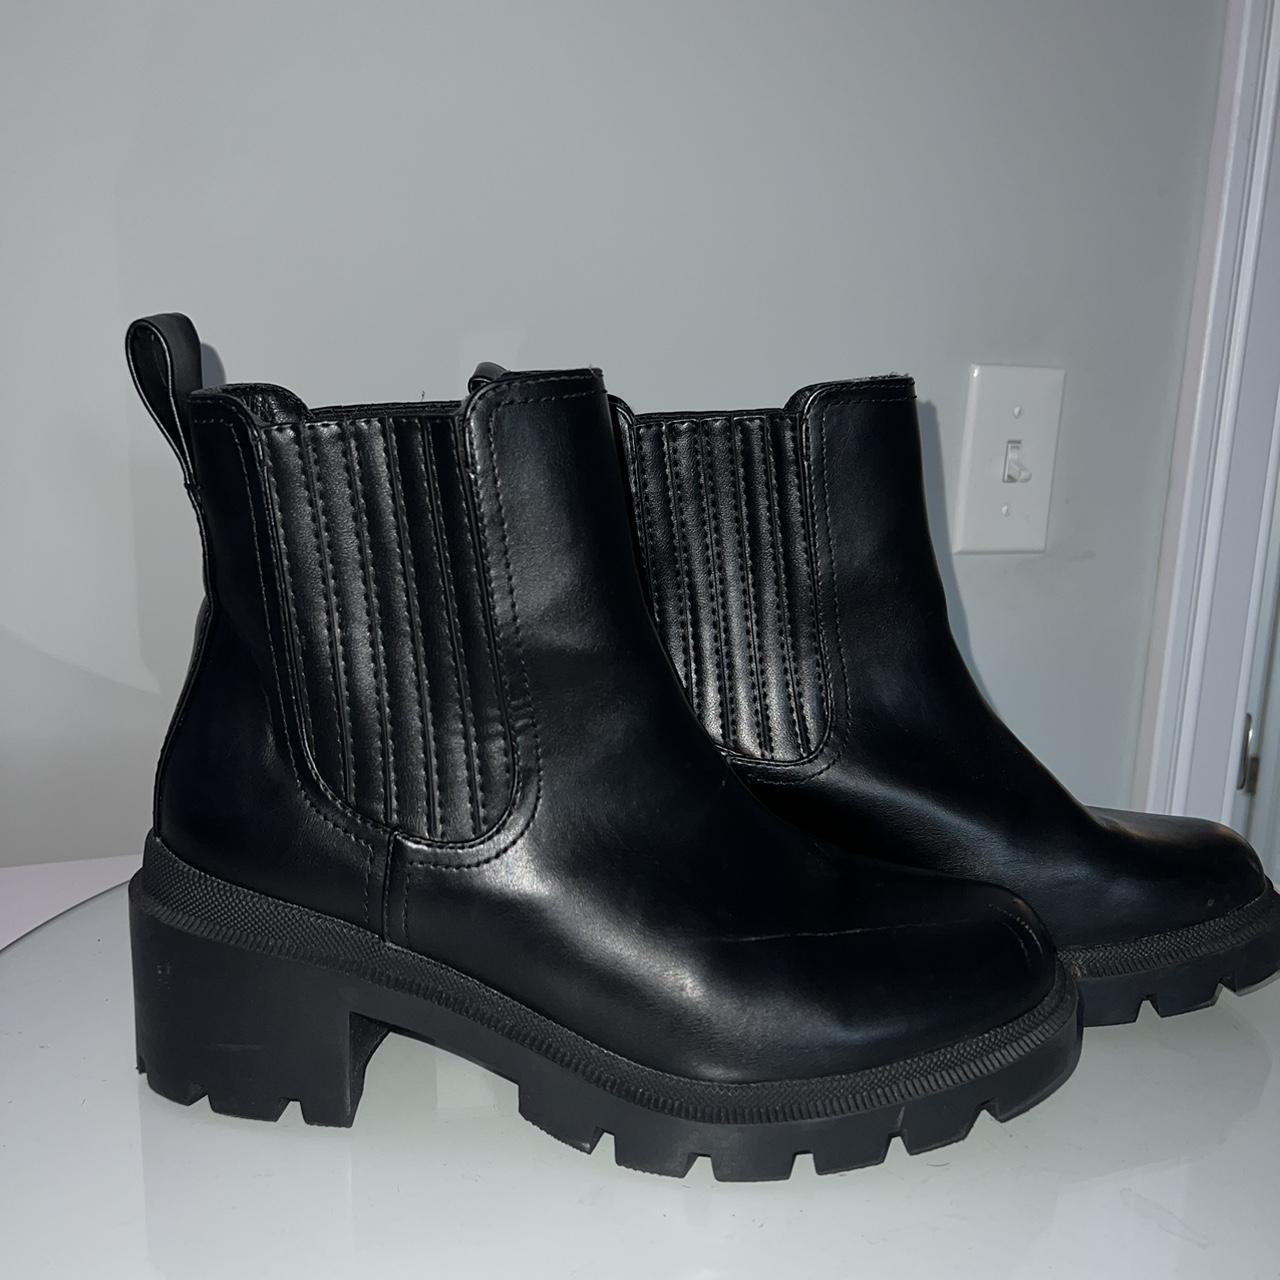 Black Leather Boots - super comfortable - Depop